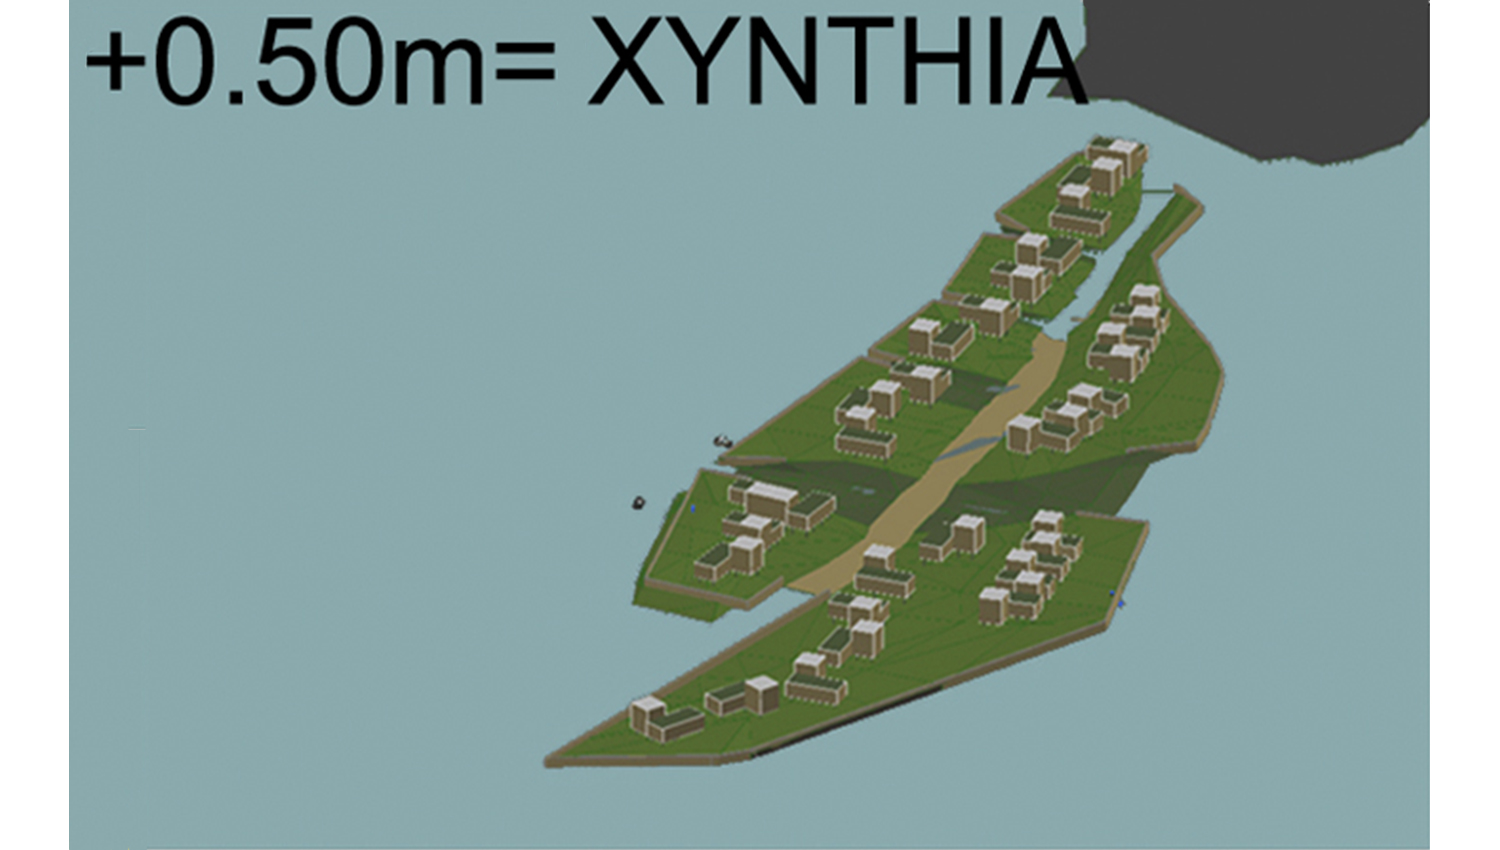 Xynthia-sub04-urbanisme&paysage-alterlab.jpg